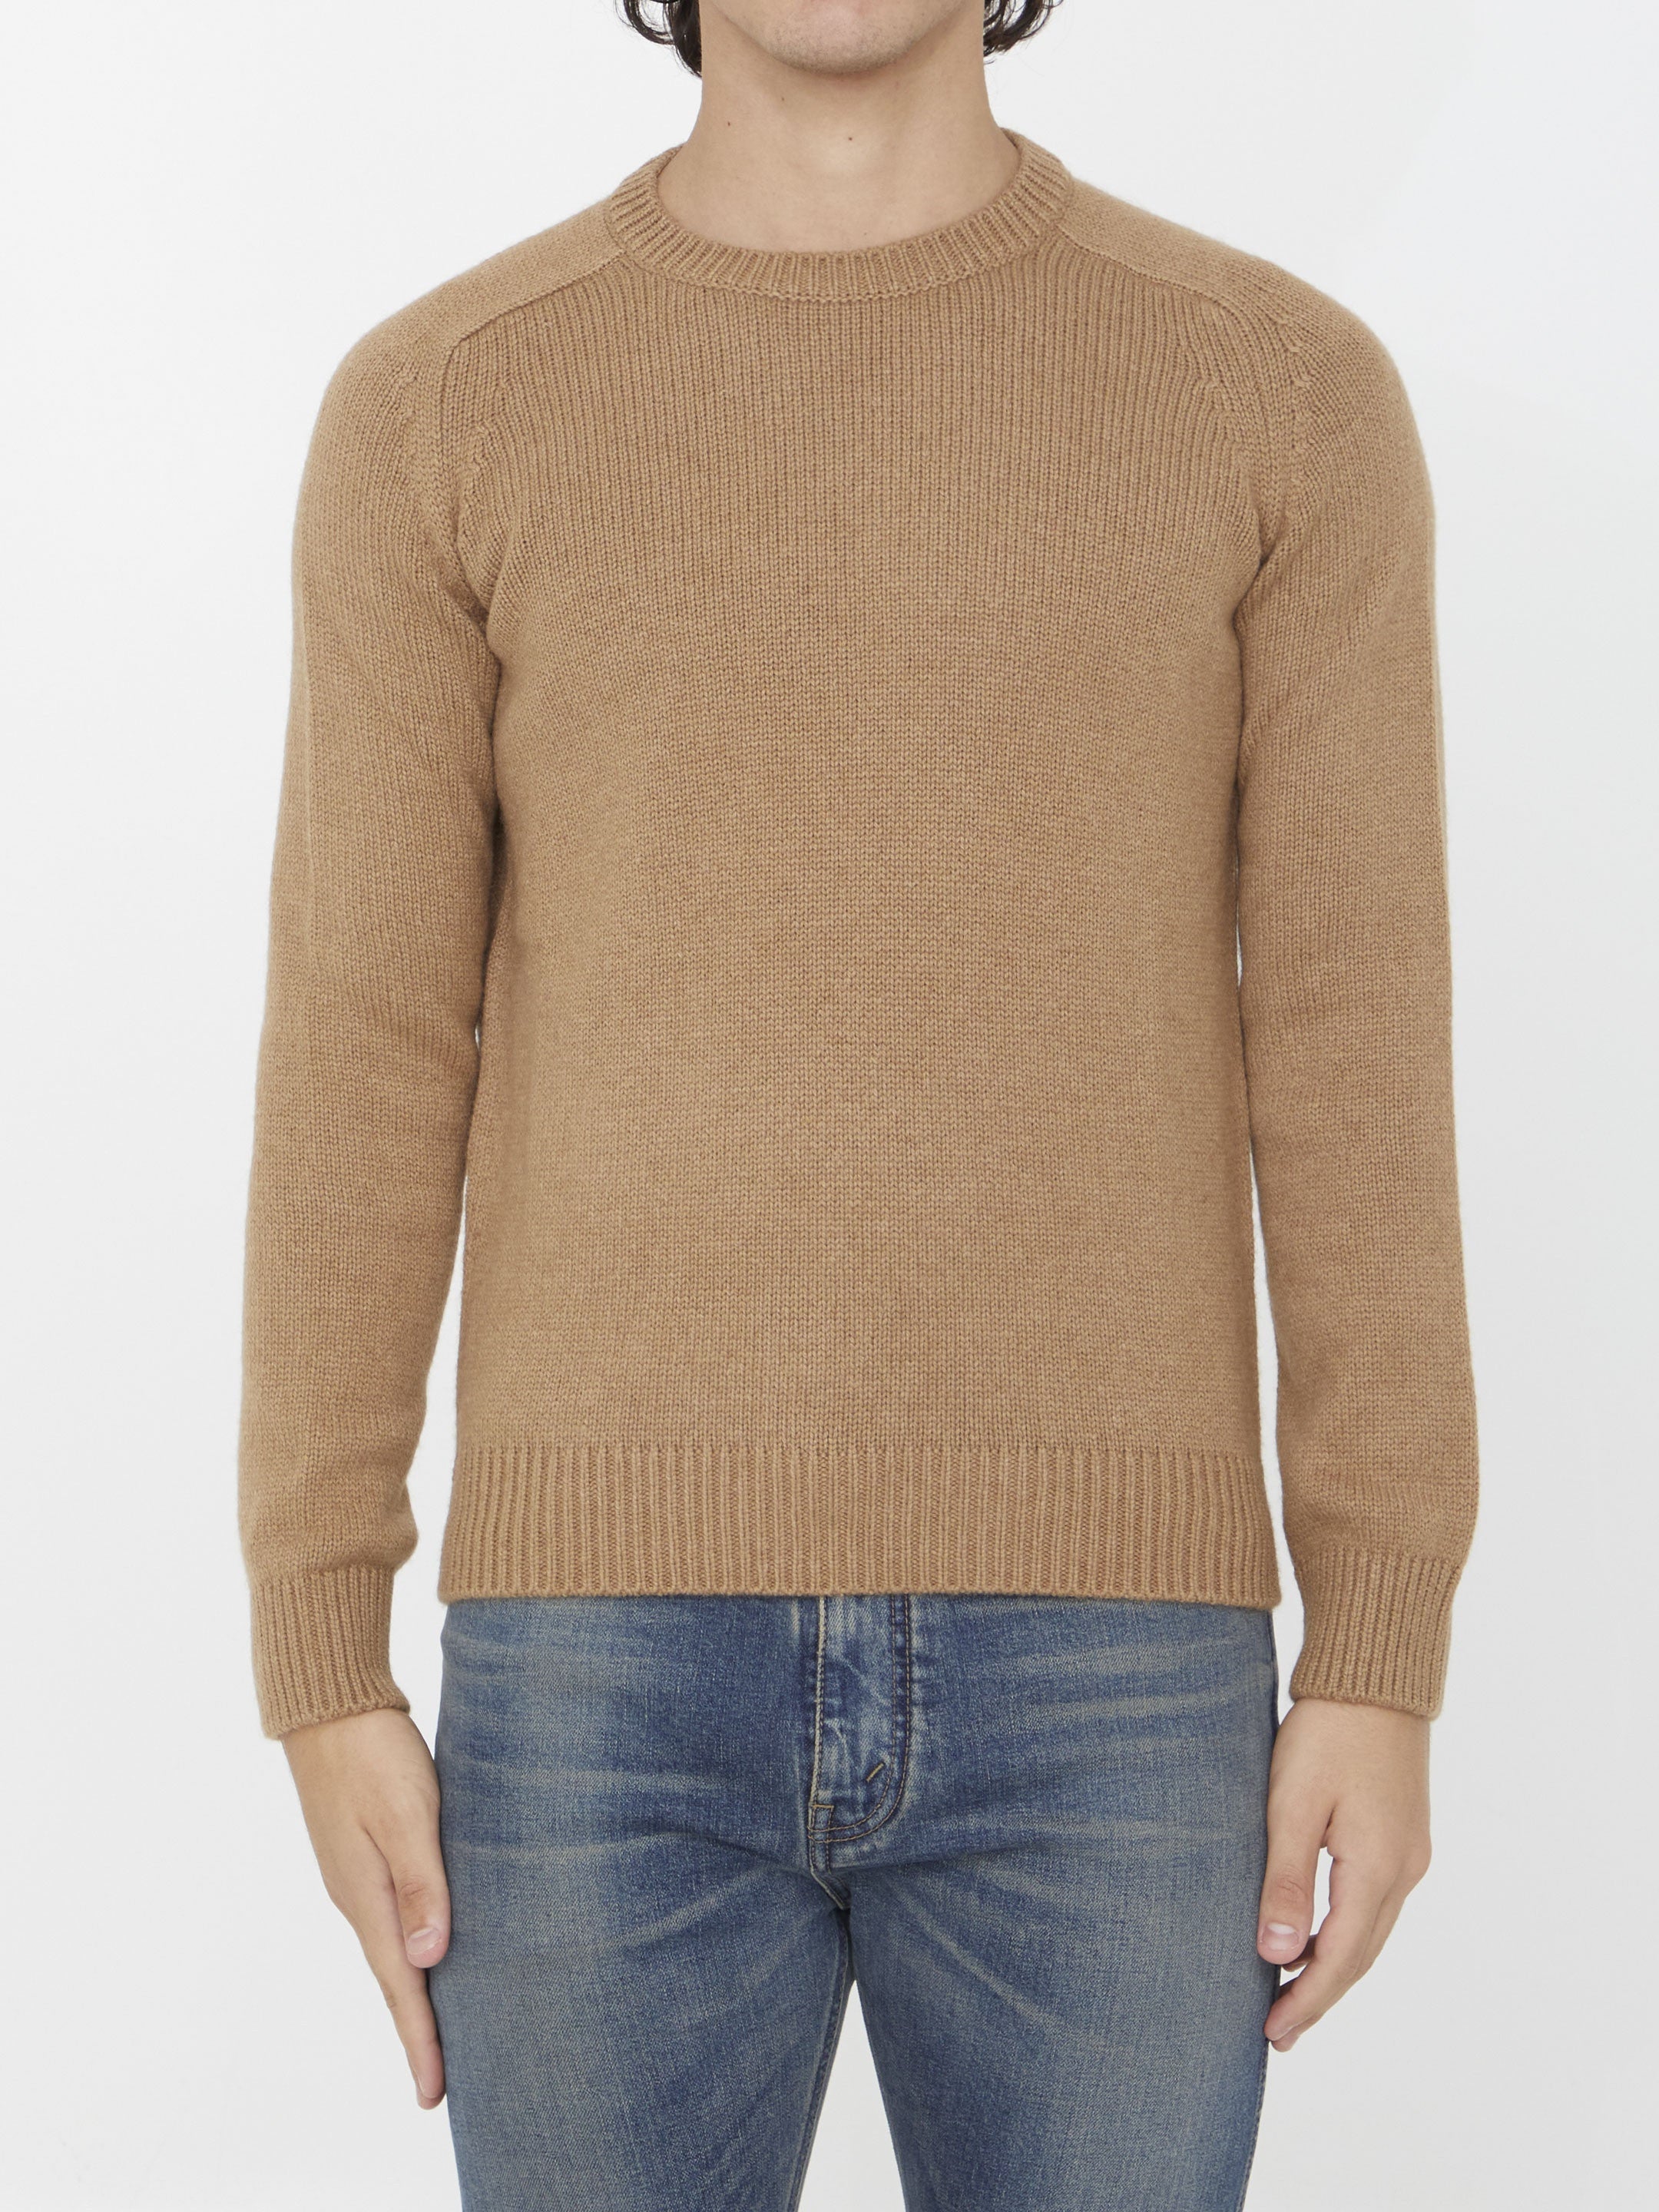 SAINT-LAURENT-OUTLET-SALE-Wool-sweater-Strick-M-BEIGE-ARCHIVE-COLLECTION.jpg